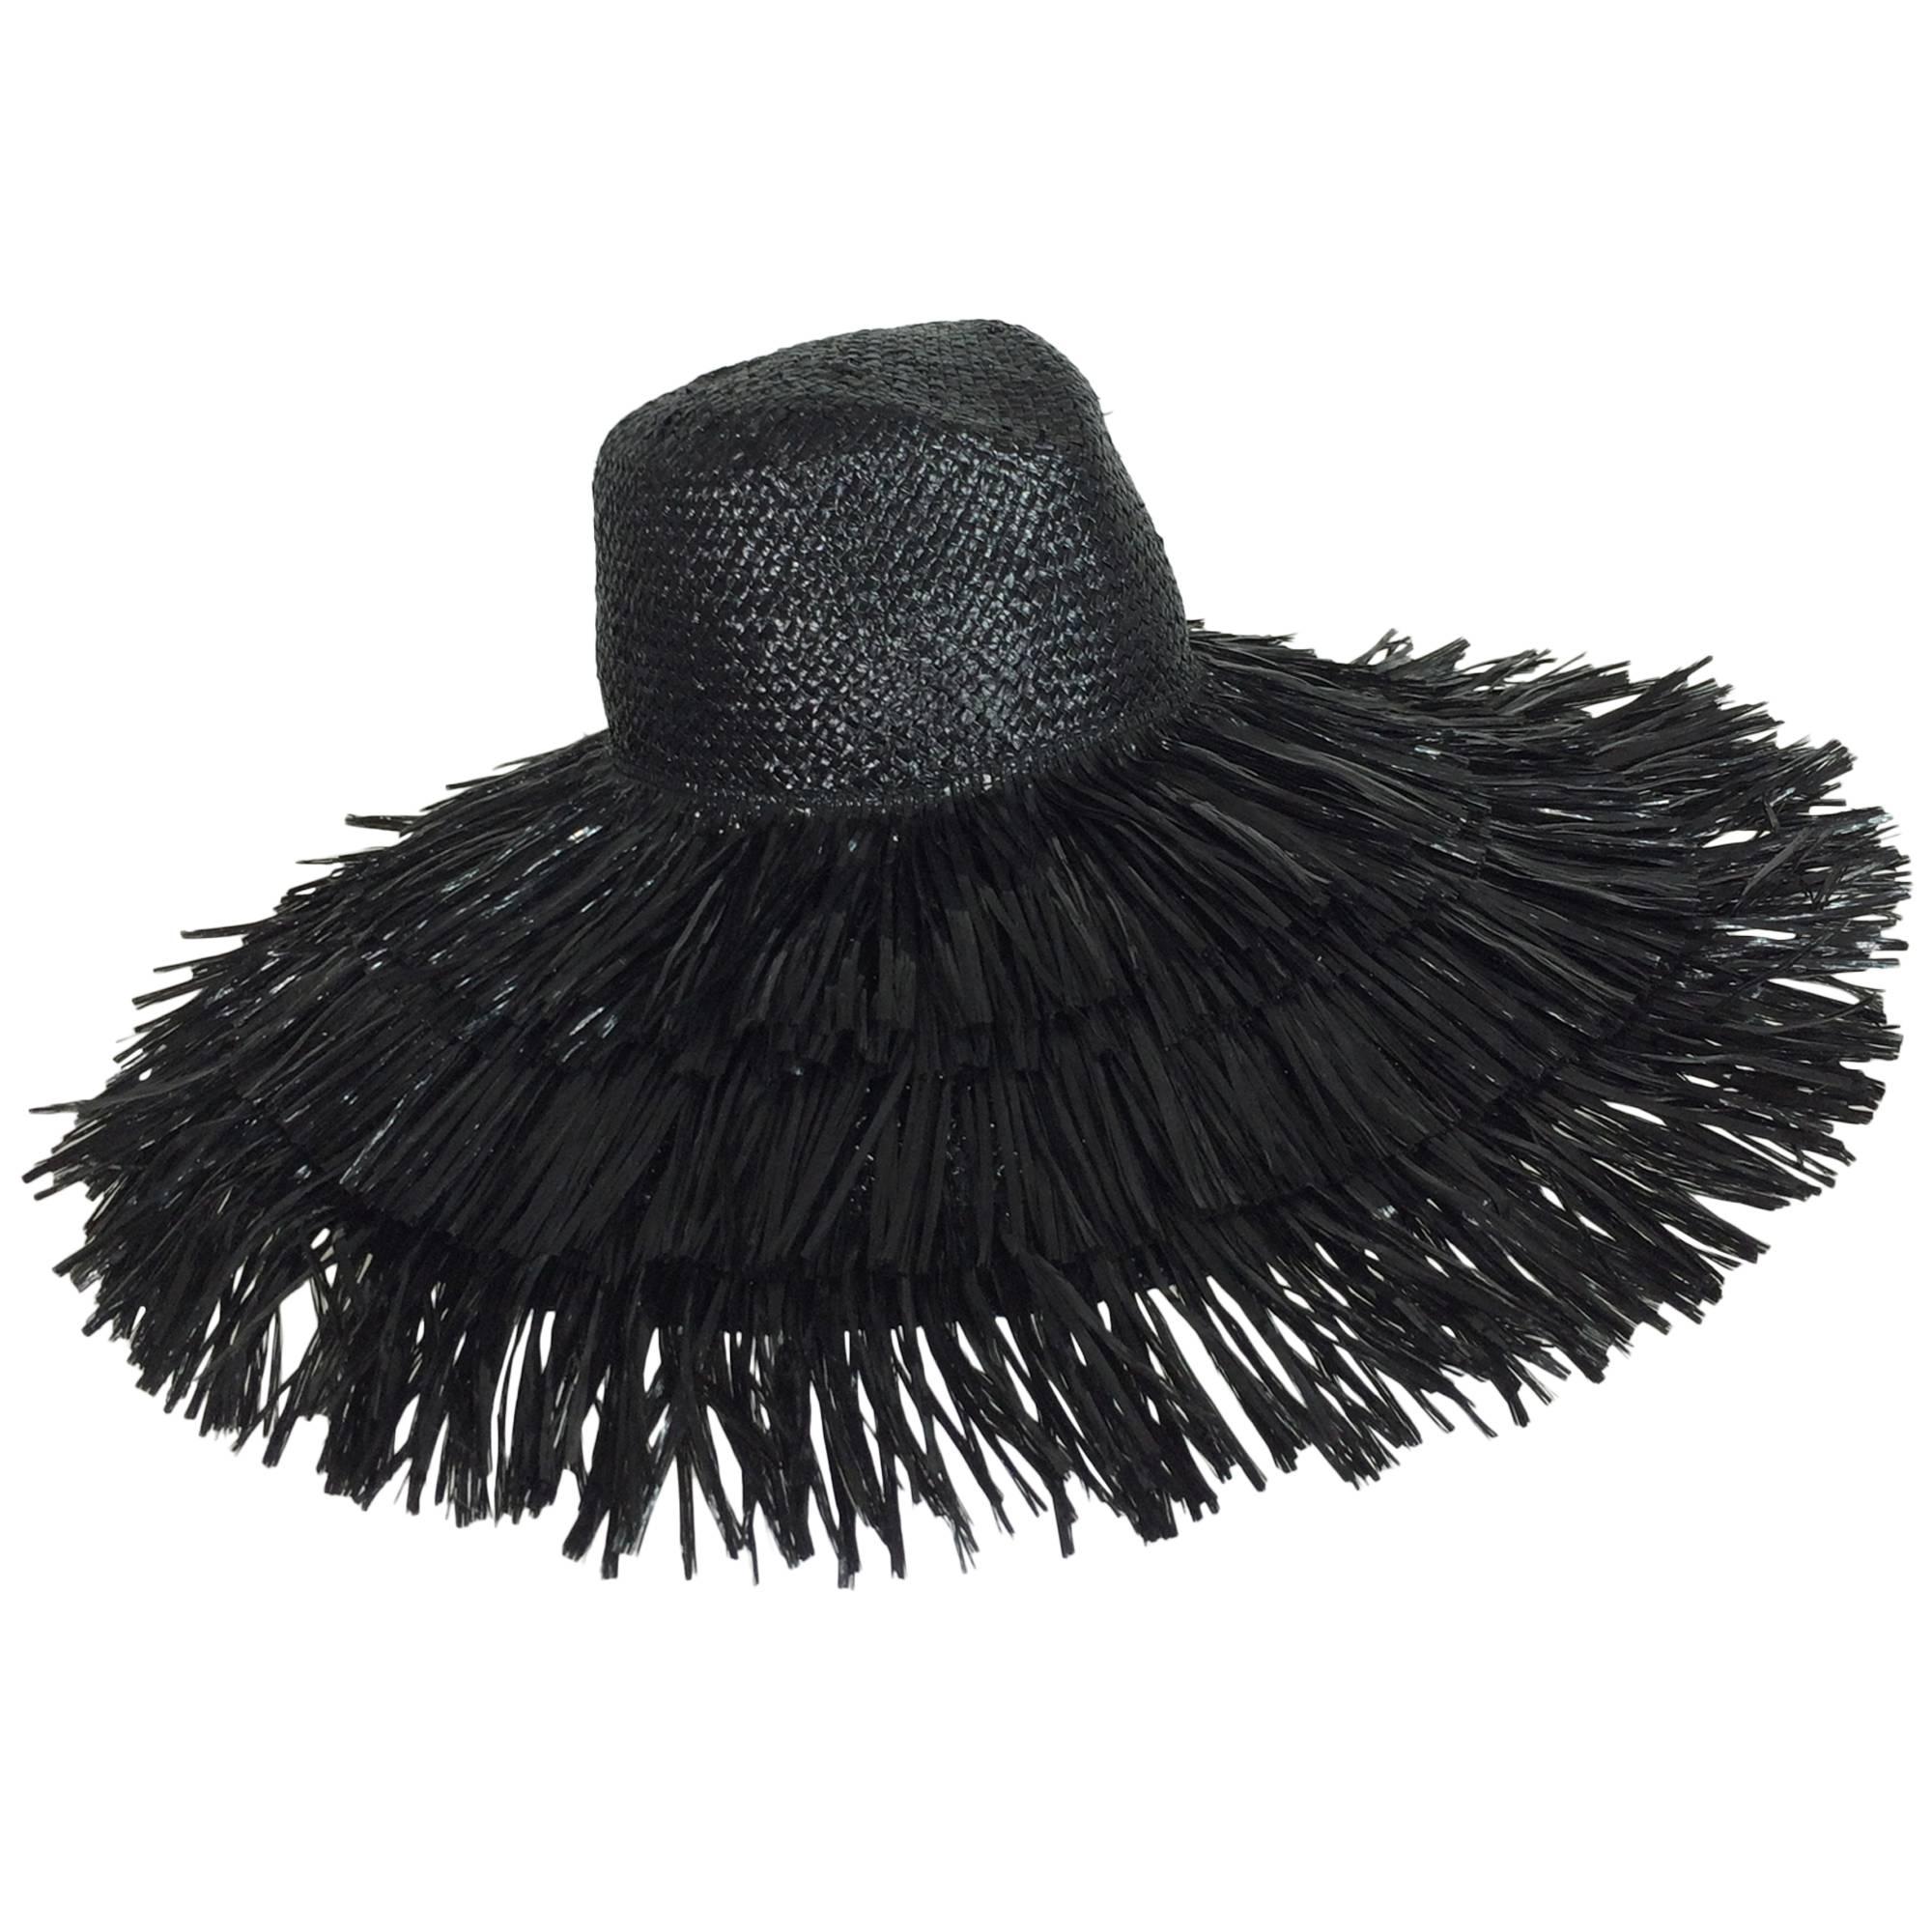 Vintage Eric Javits glazed black straw shaggy finge wide brim hat 1980s unworn